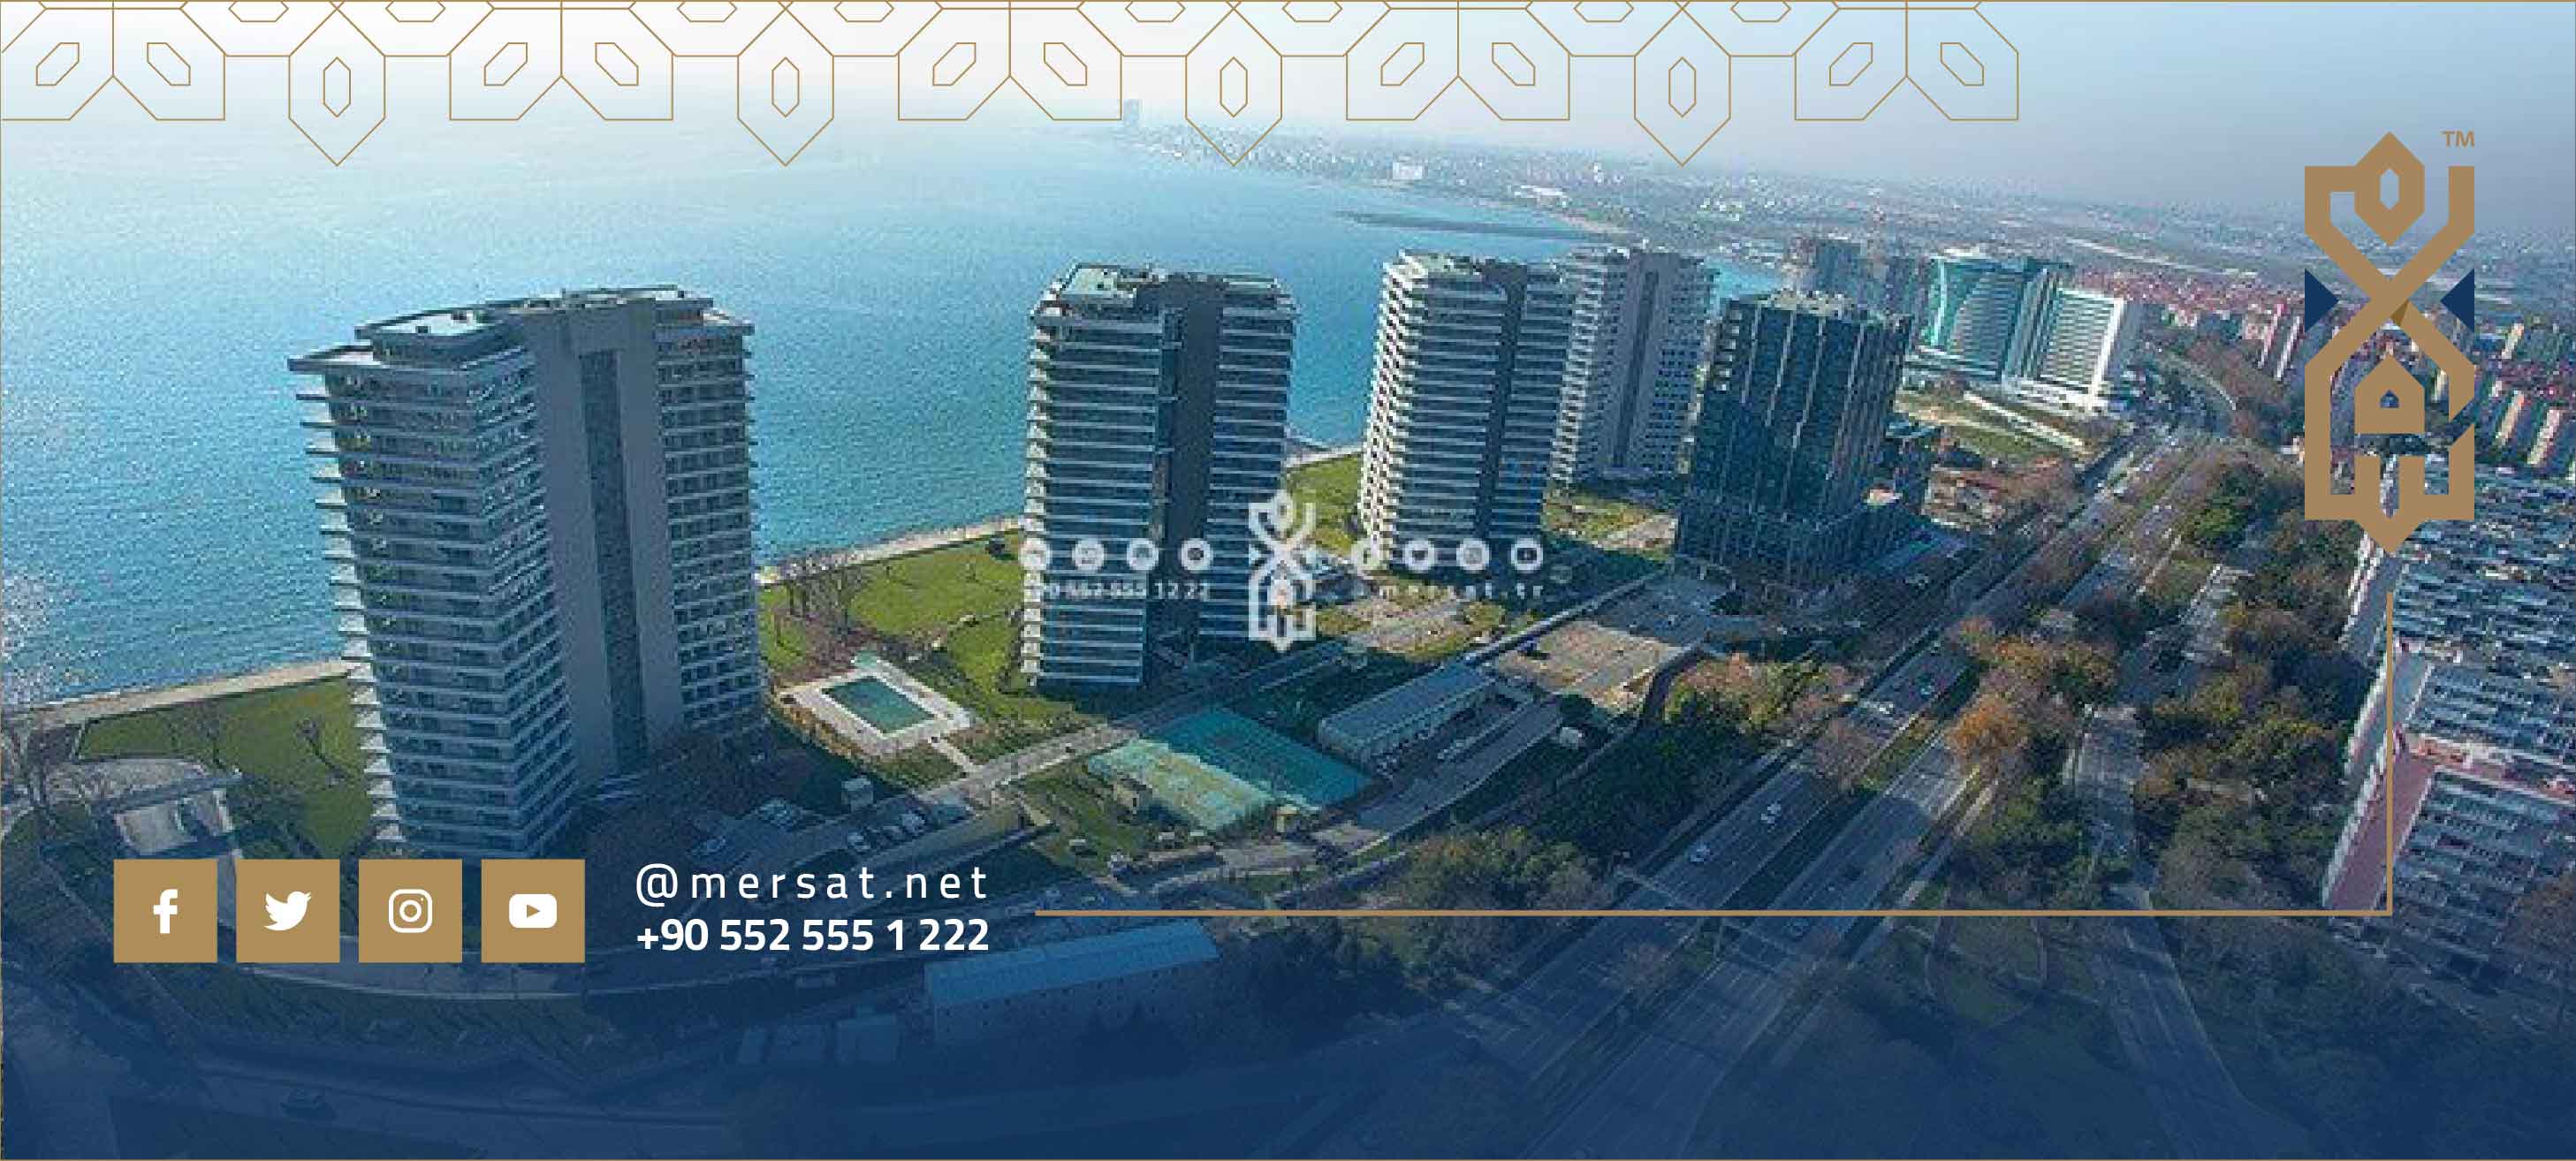 buy real estate in Turkey 2021-2022